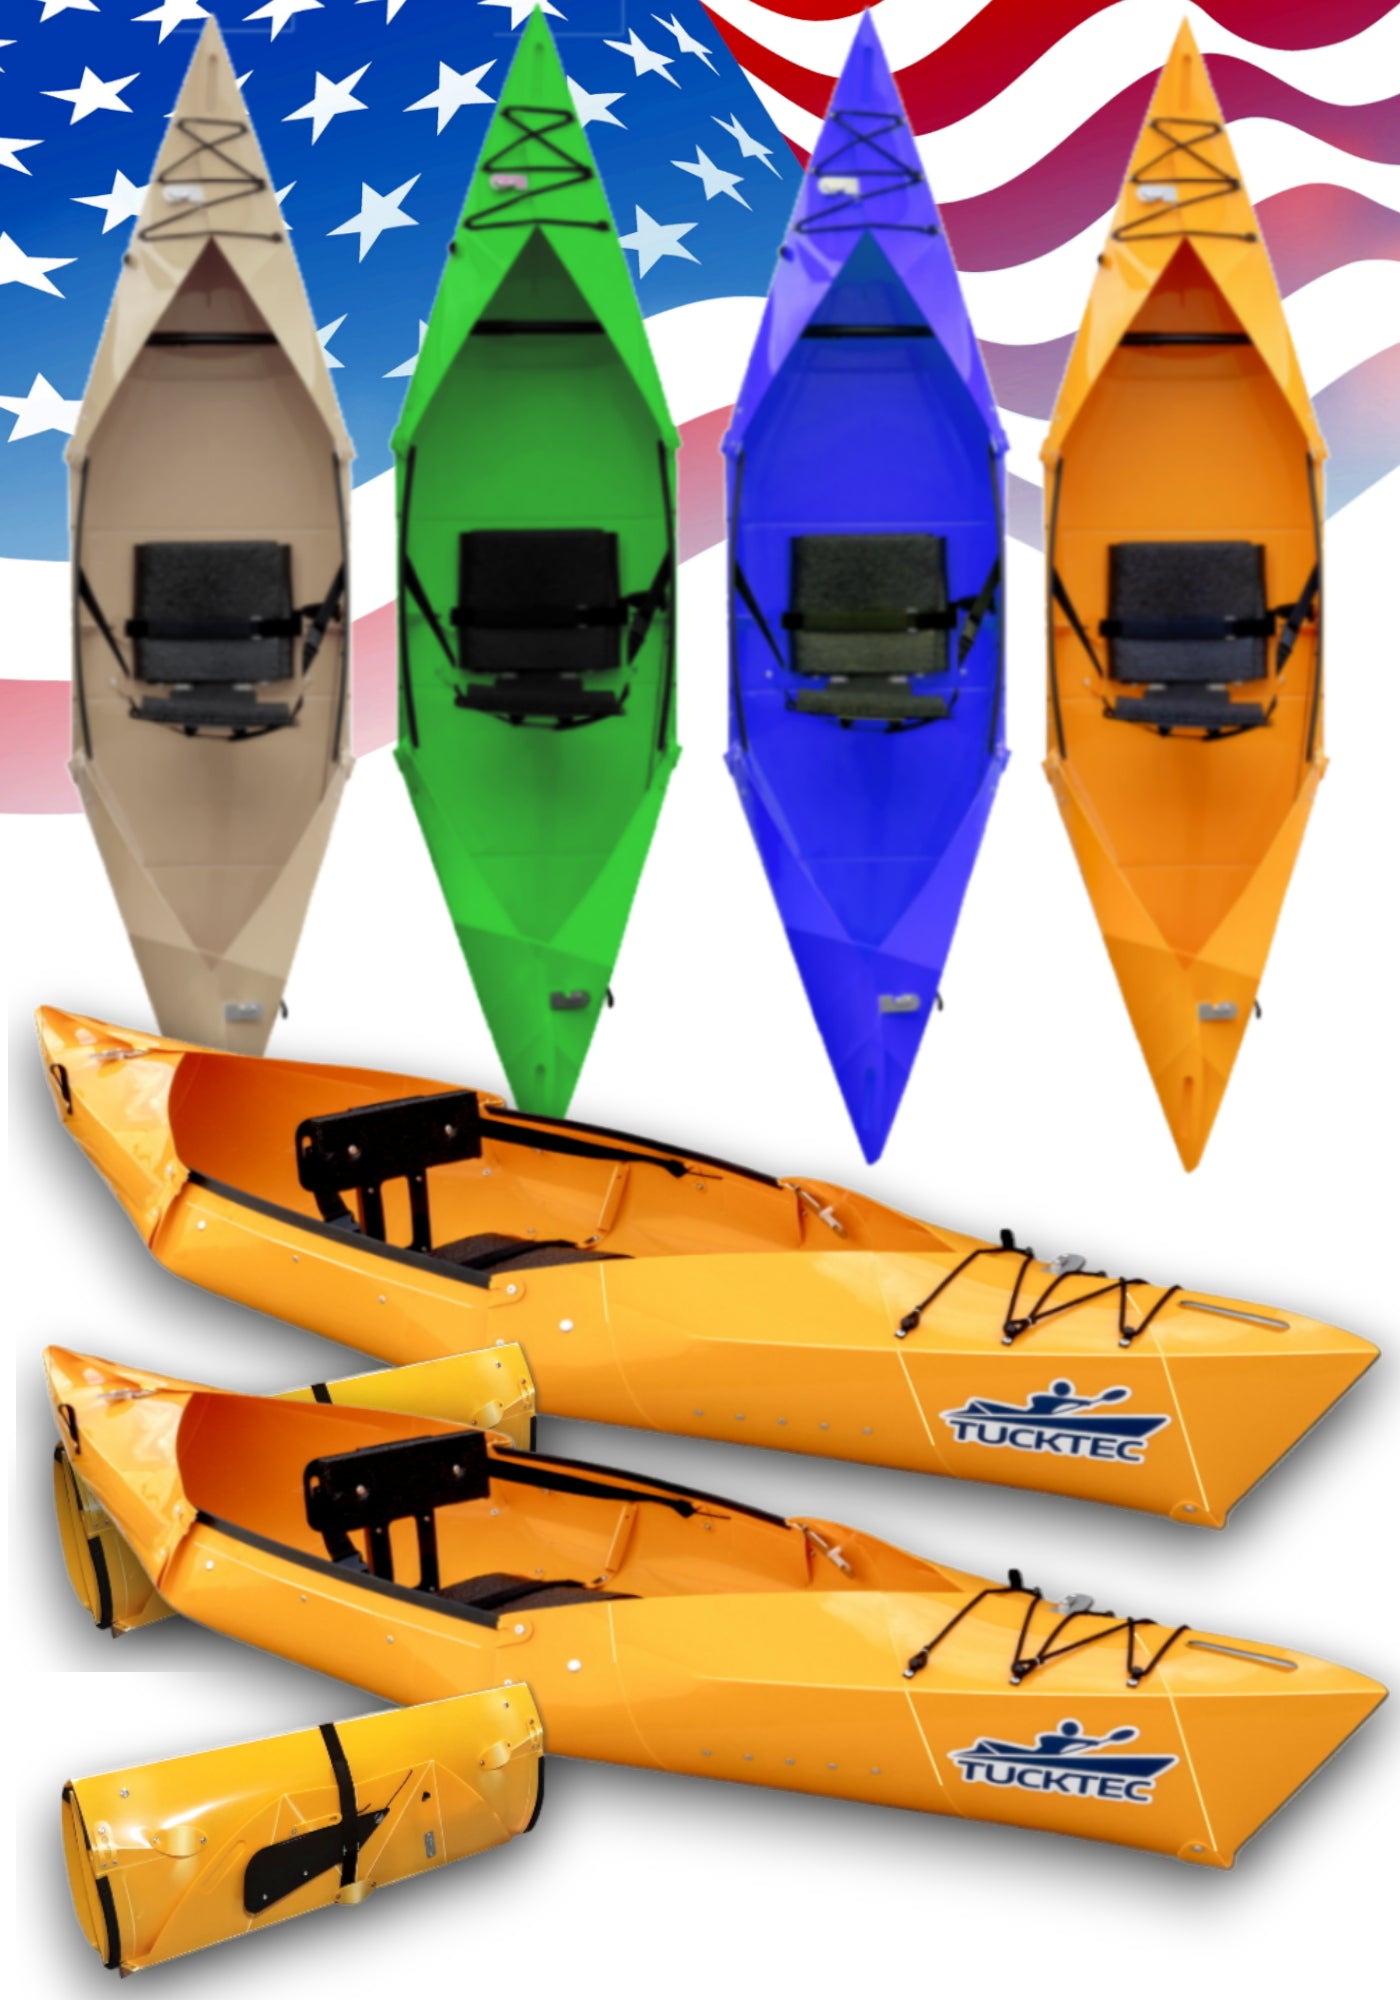 Folding Kayaks 2 for $650